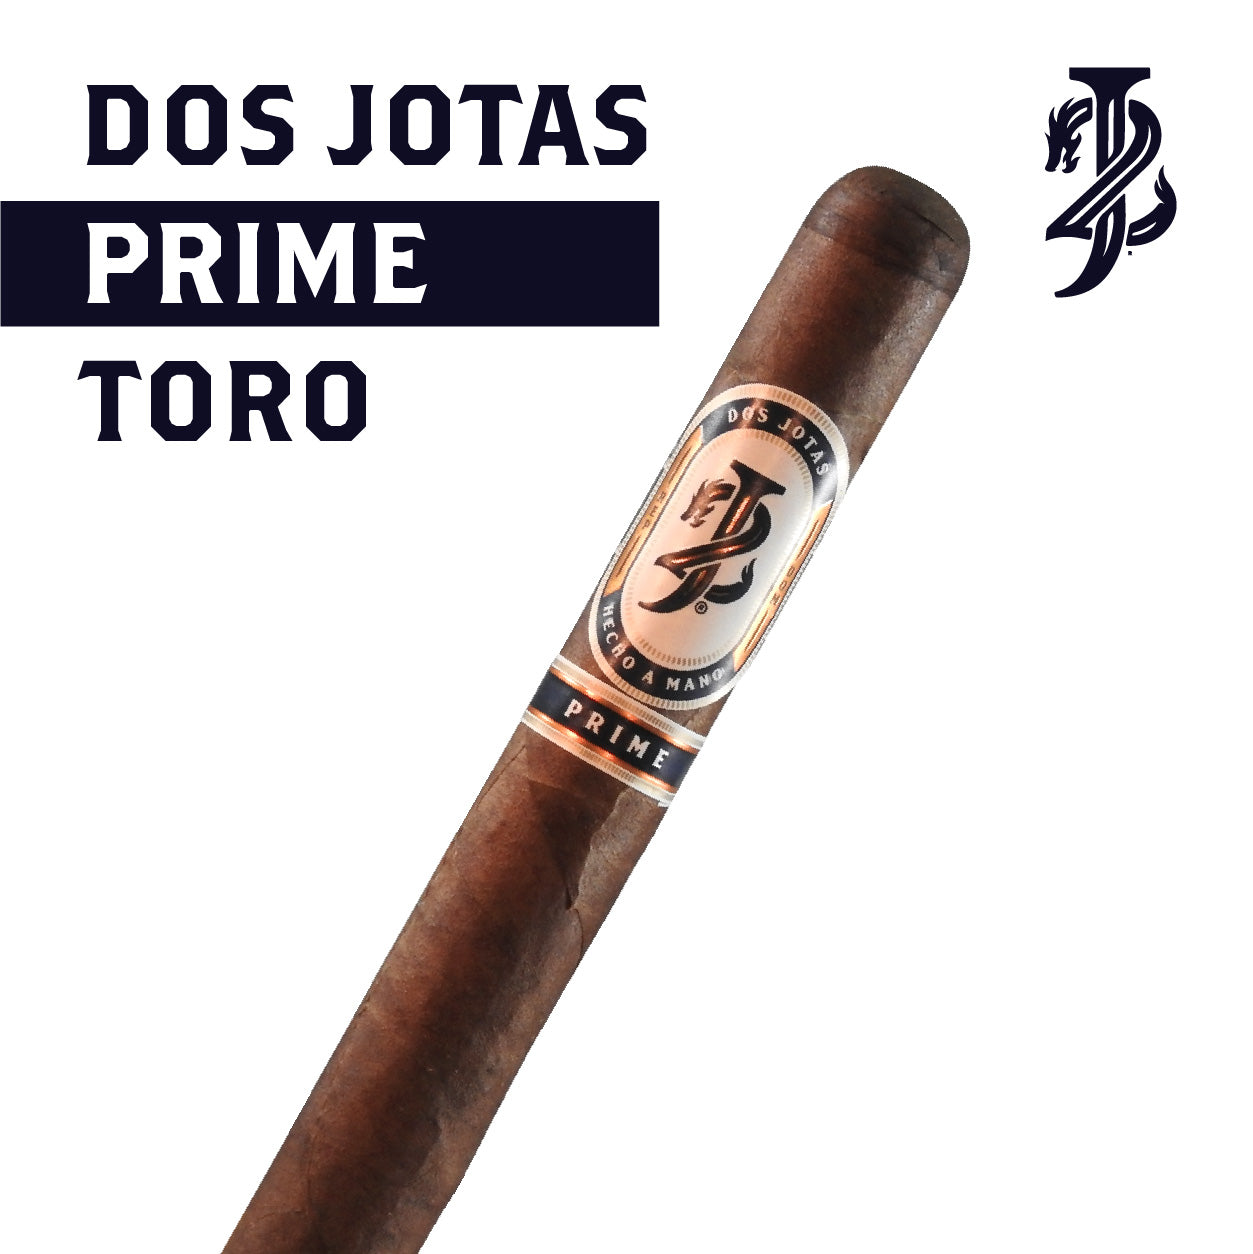 Dos Jotas Prime - Toro